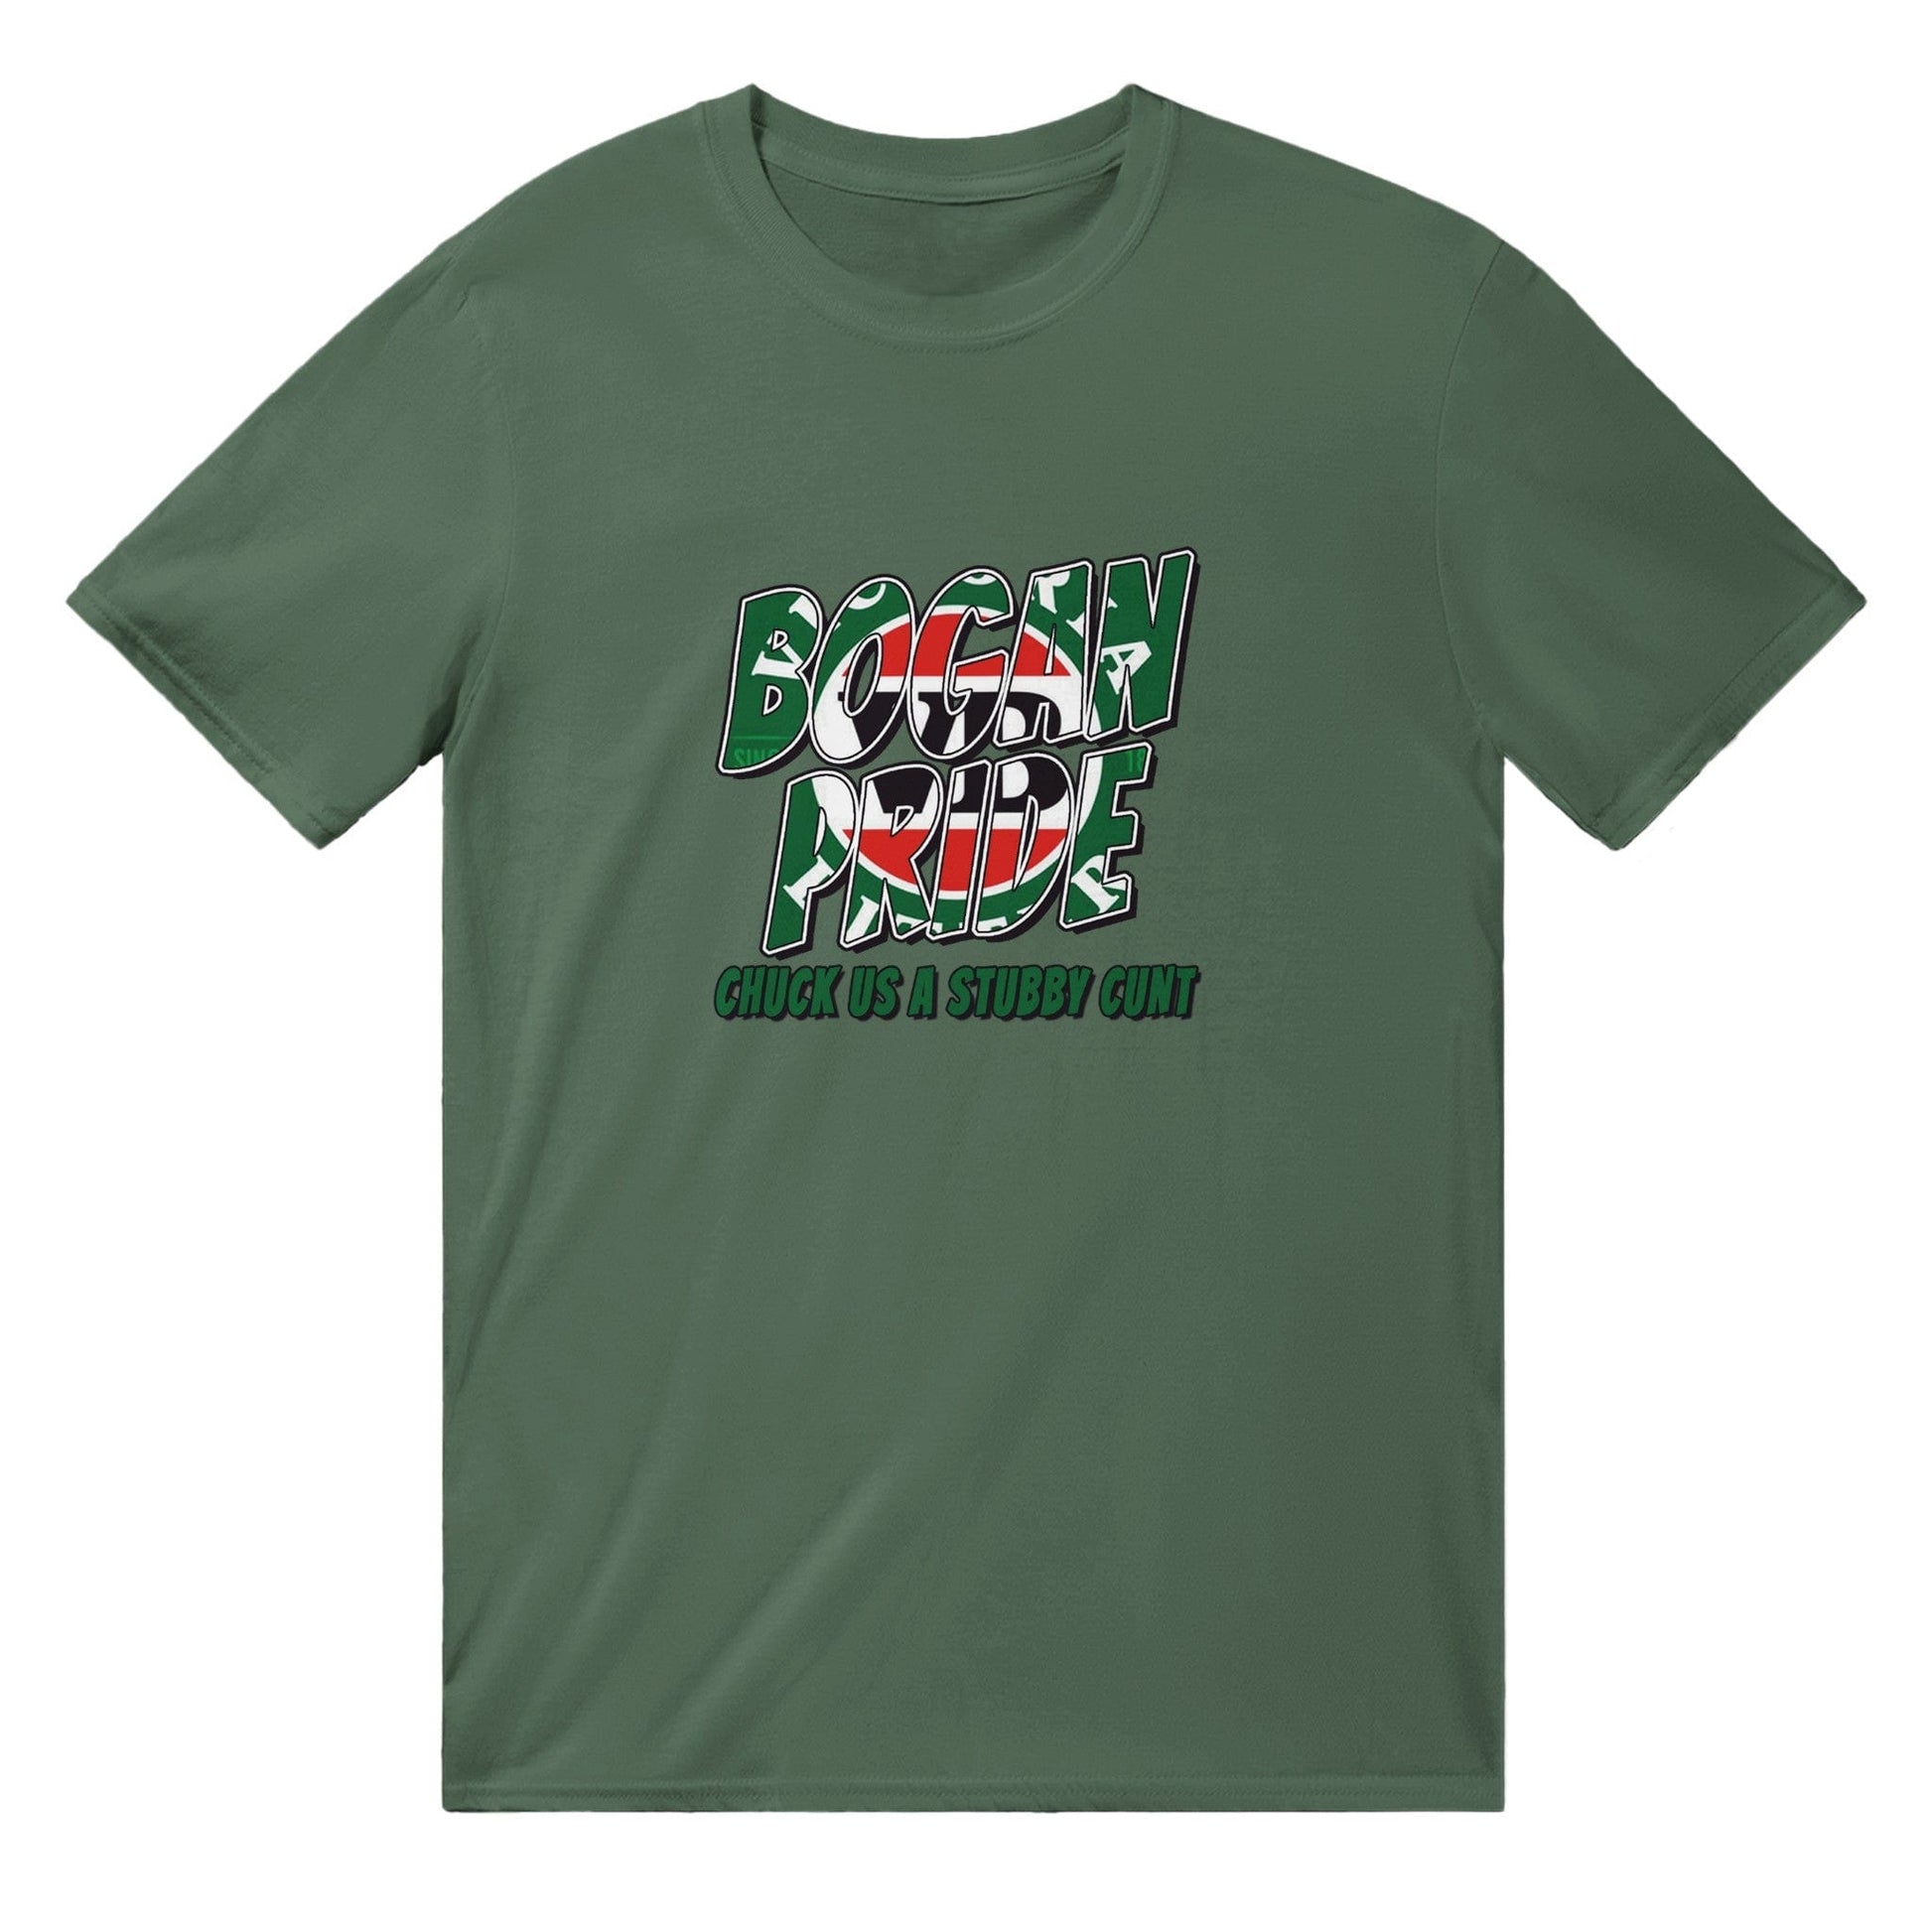 Bogan Pride VB T-Shirt Australia Online Color Military Green / S